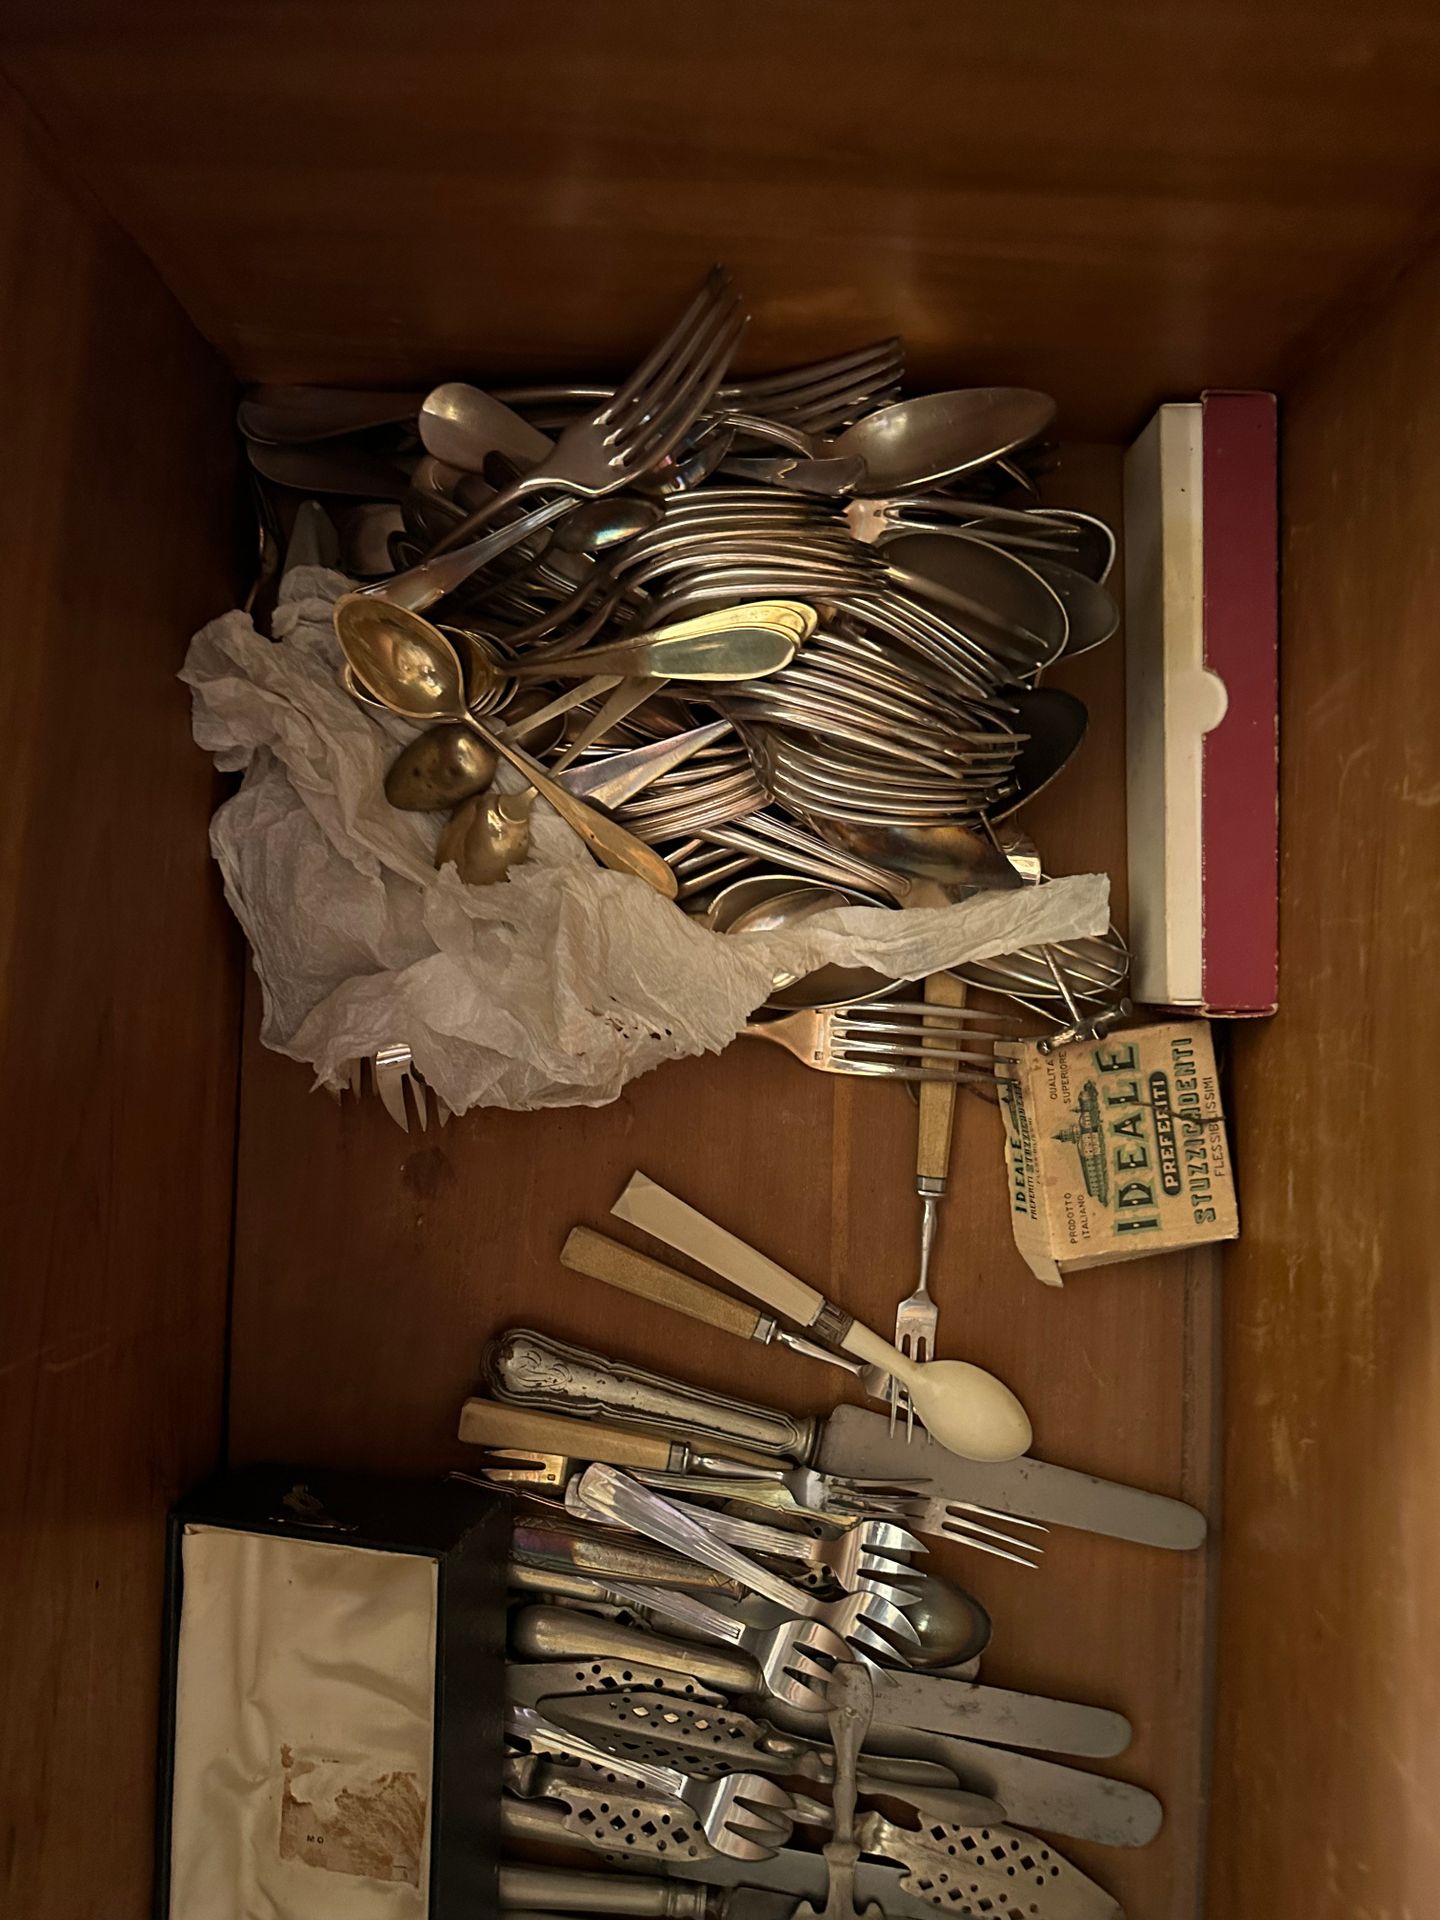 Fort lot de métal argenté Including forks, spoons, tableware